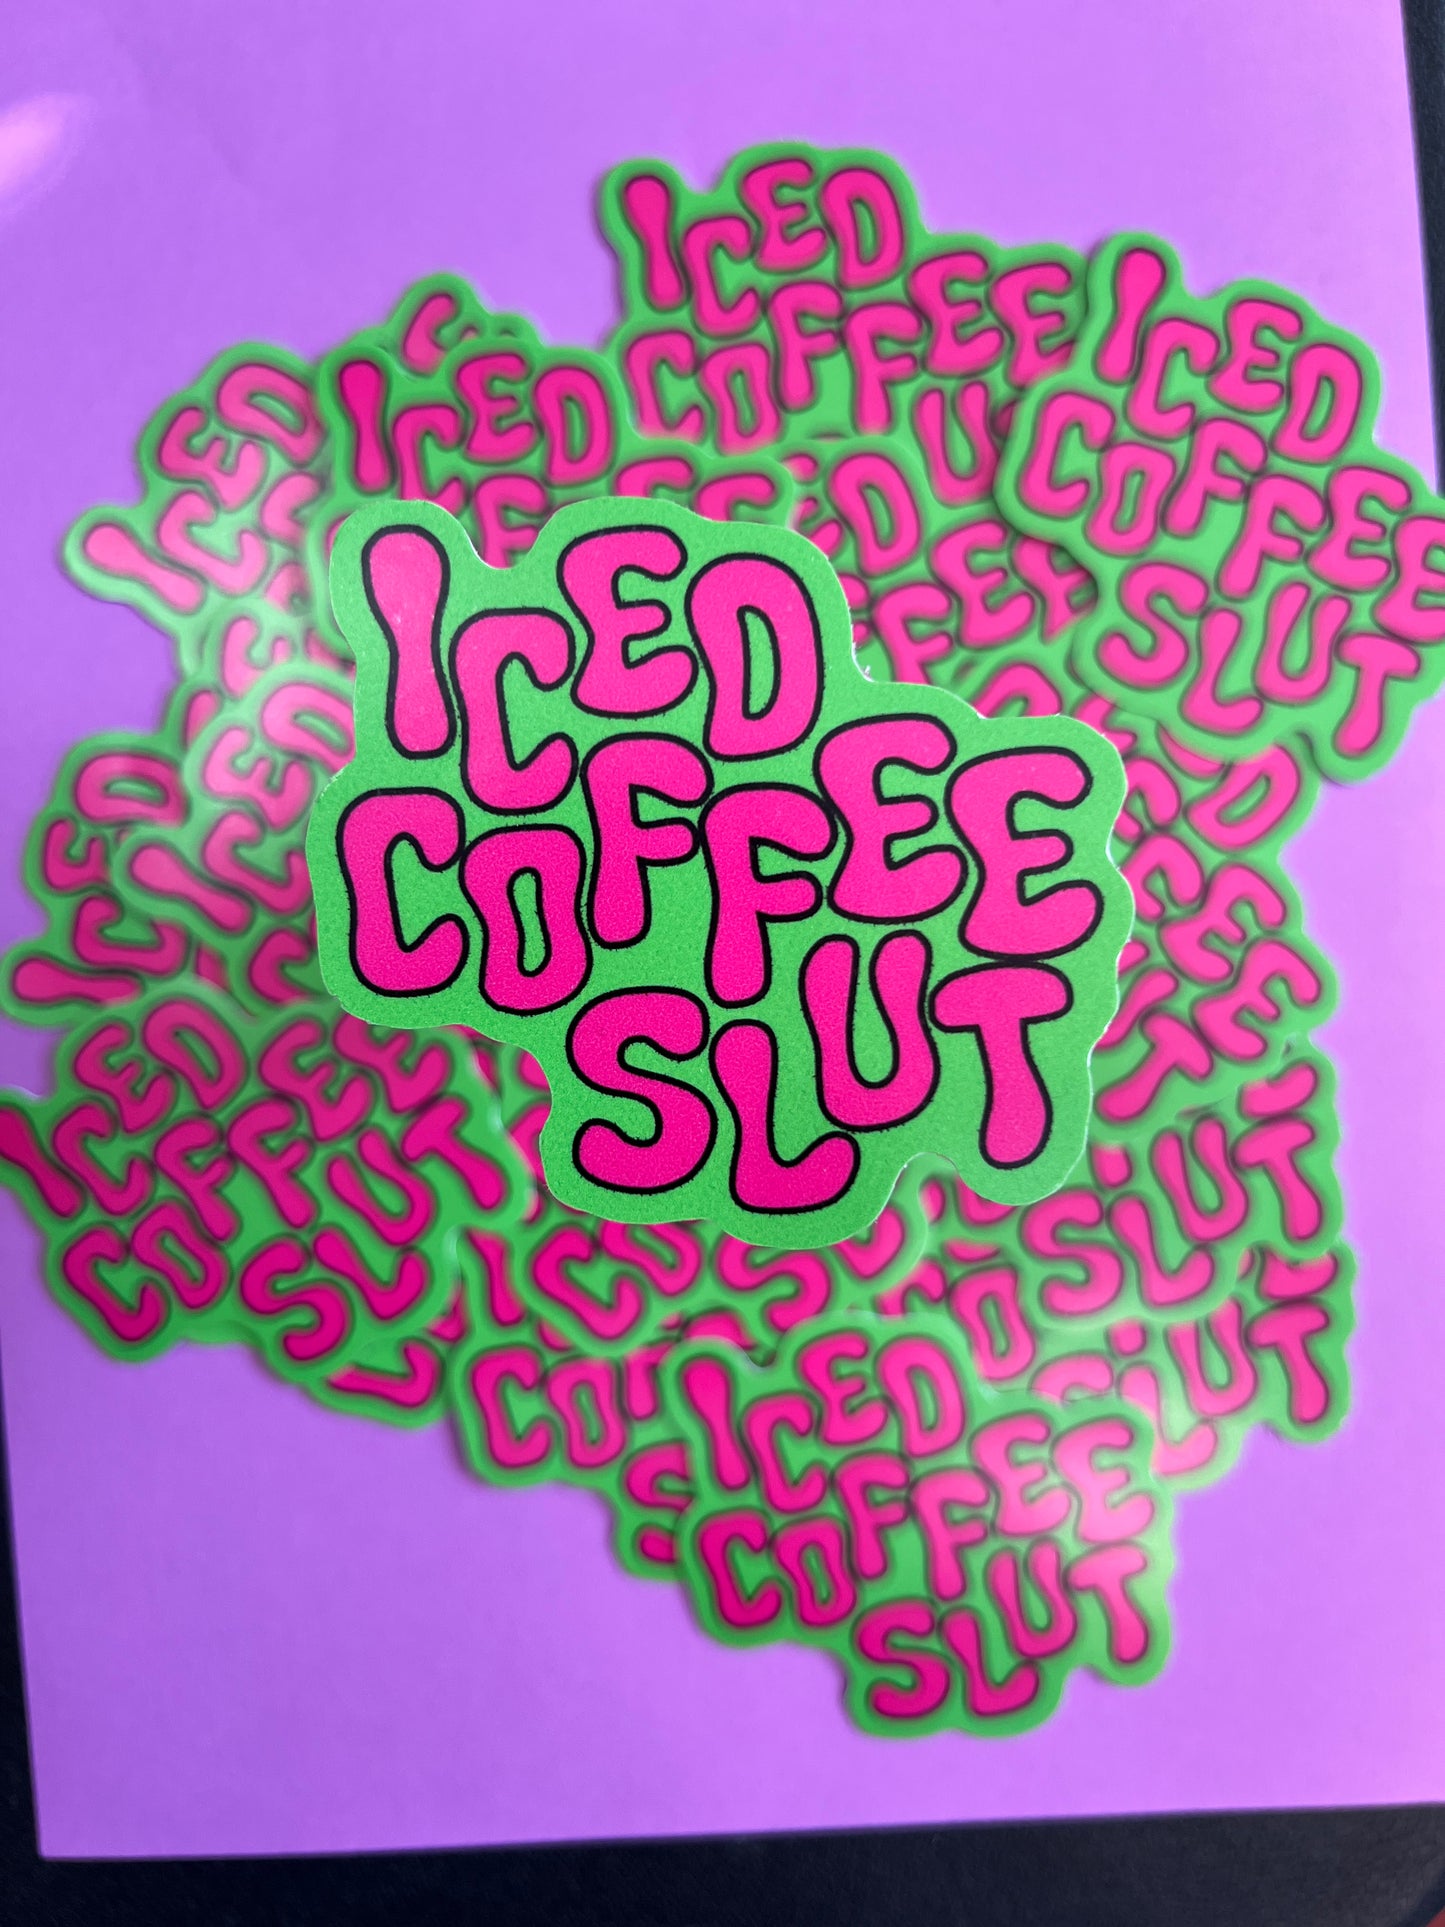 Iced Coffee Slut Sticker